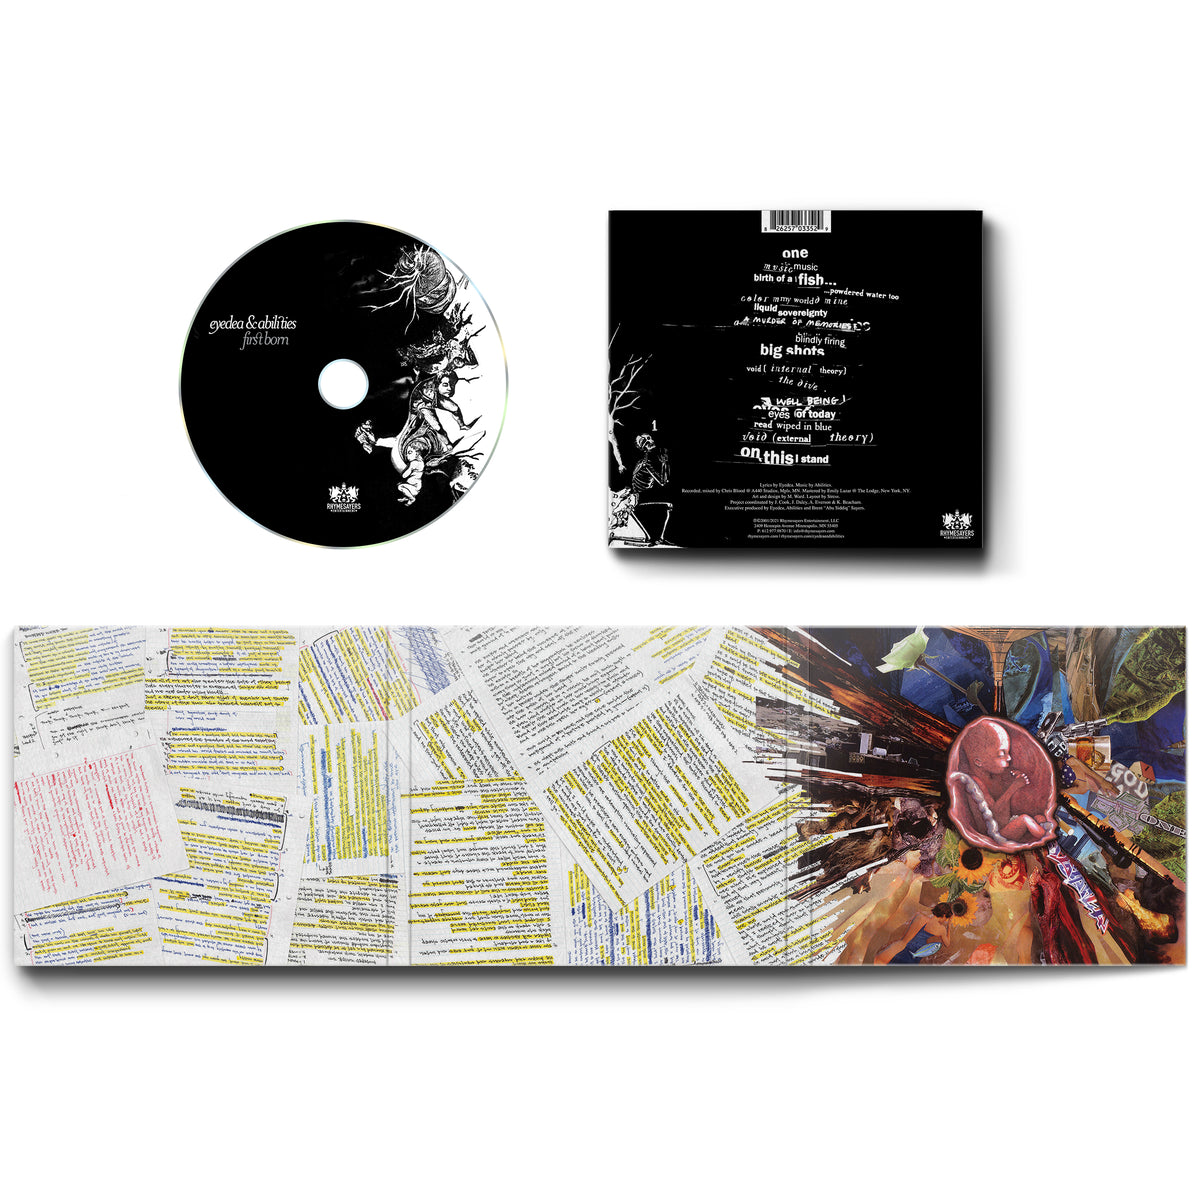 Eyedea & Abilities - First Born (20 Year Anniversary Edition 